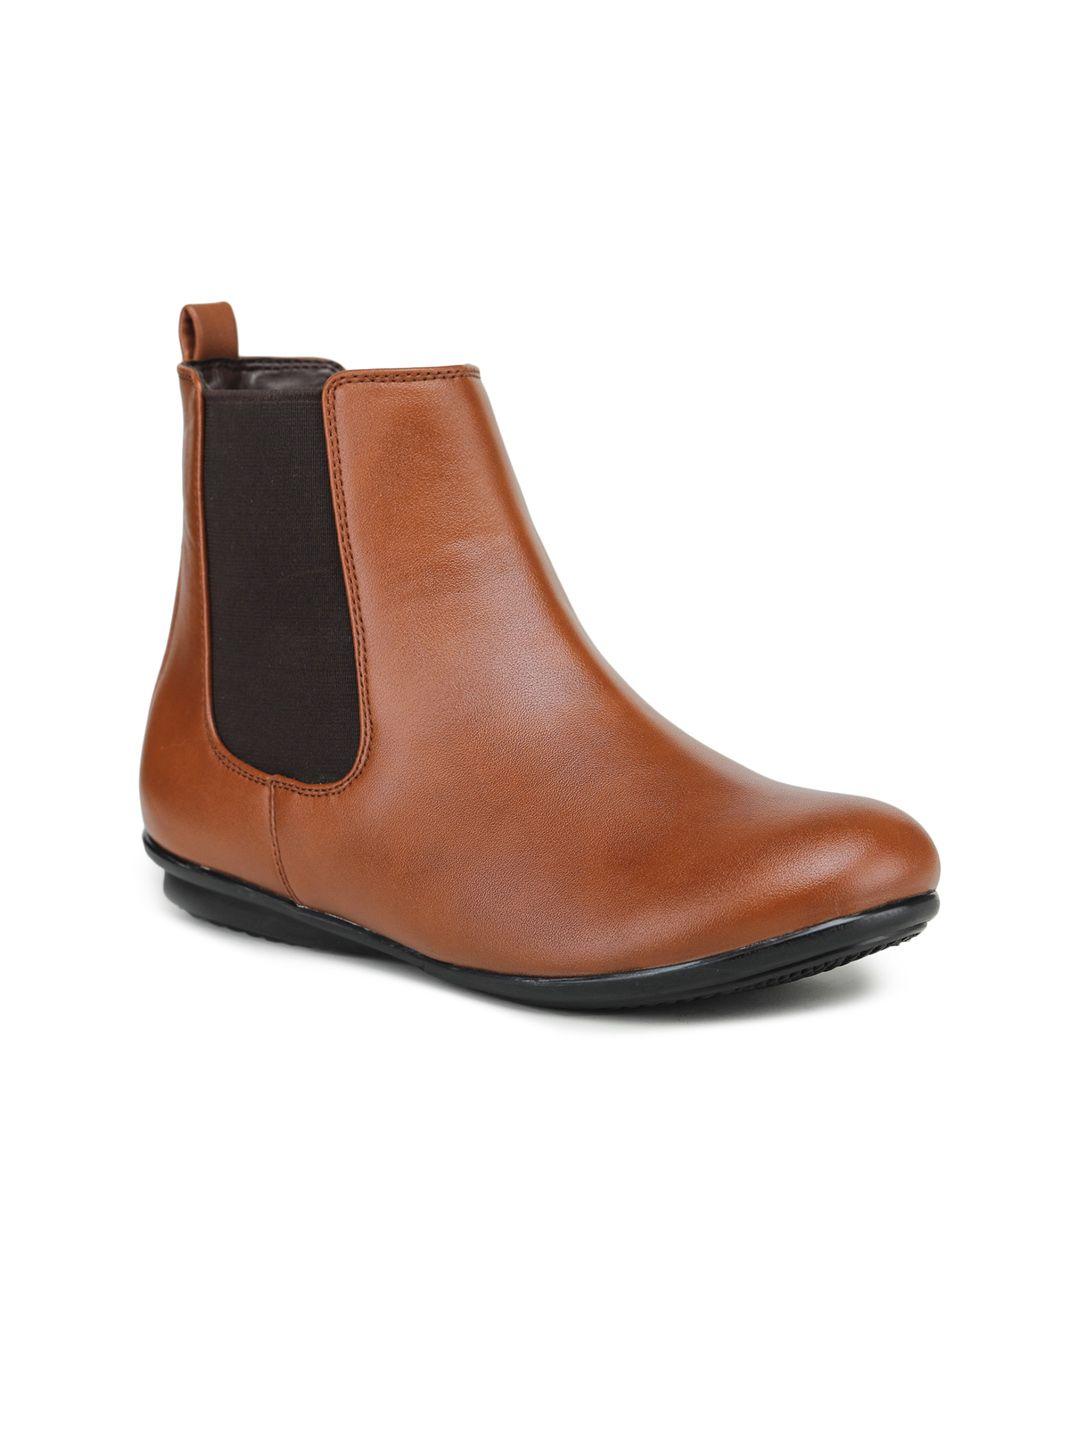 gardin women tan brown solid round toe chelsea boots